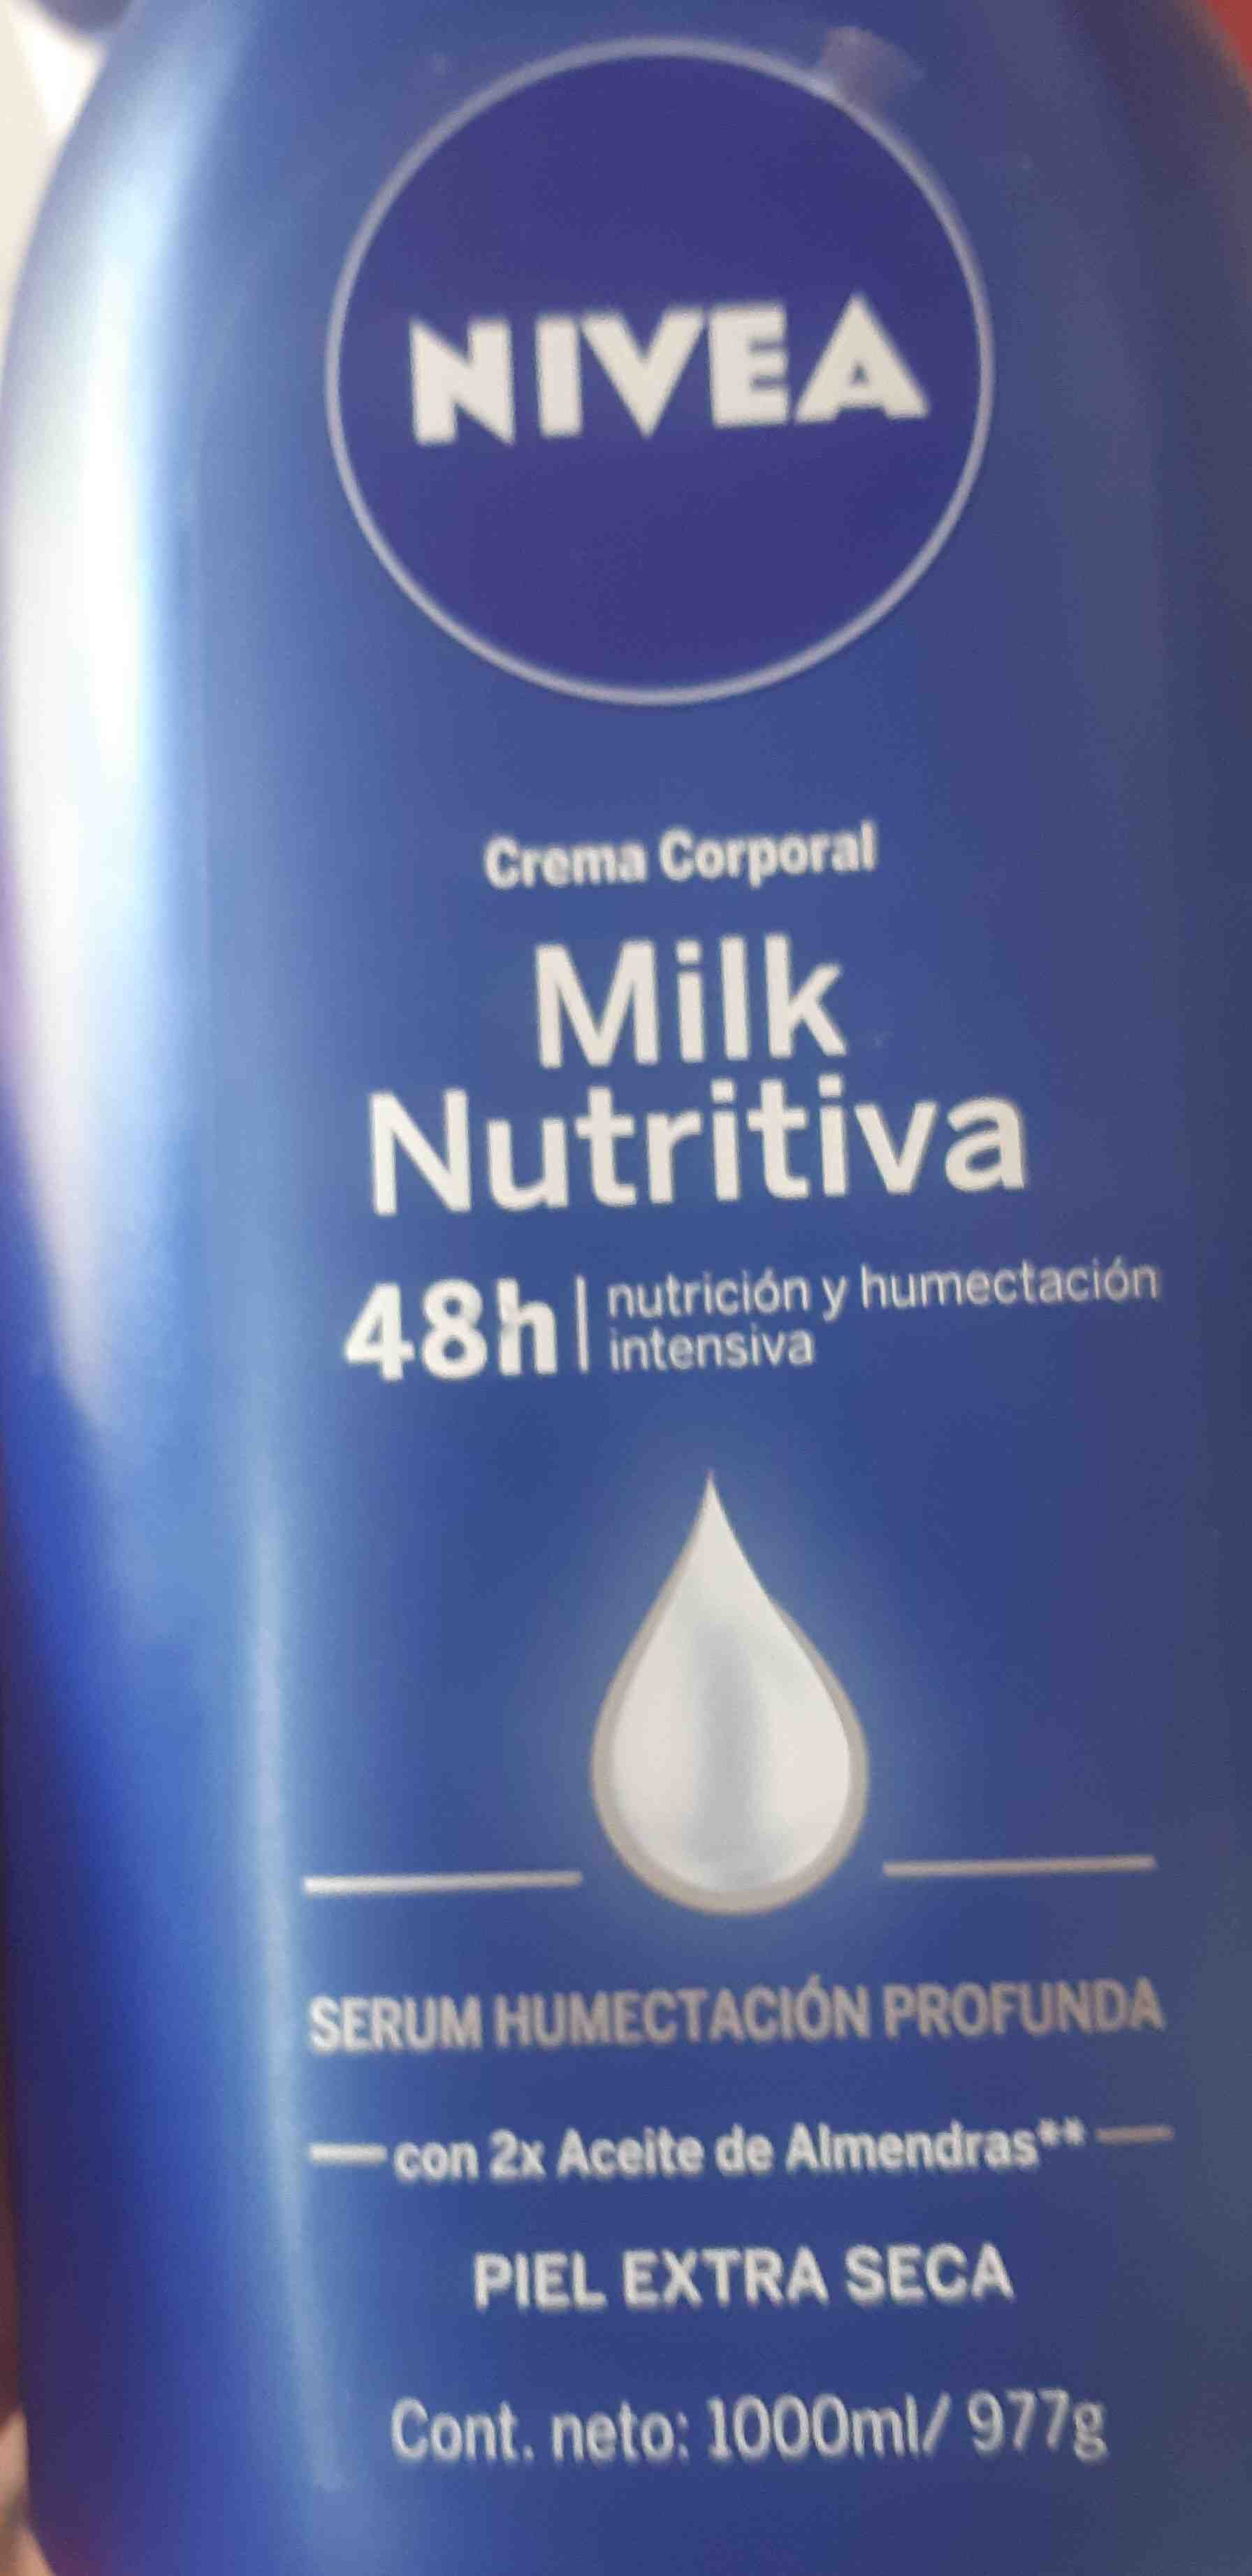 Milk nutritiva - Produto - en